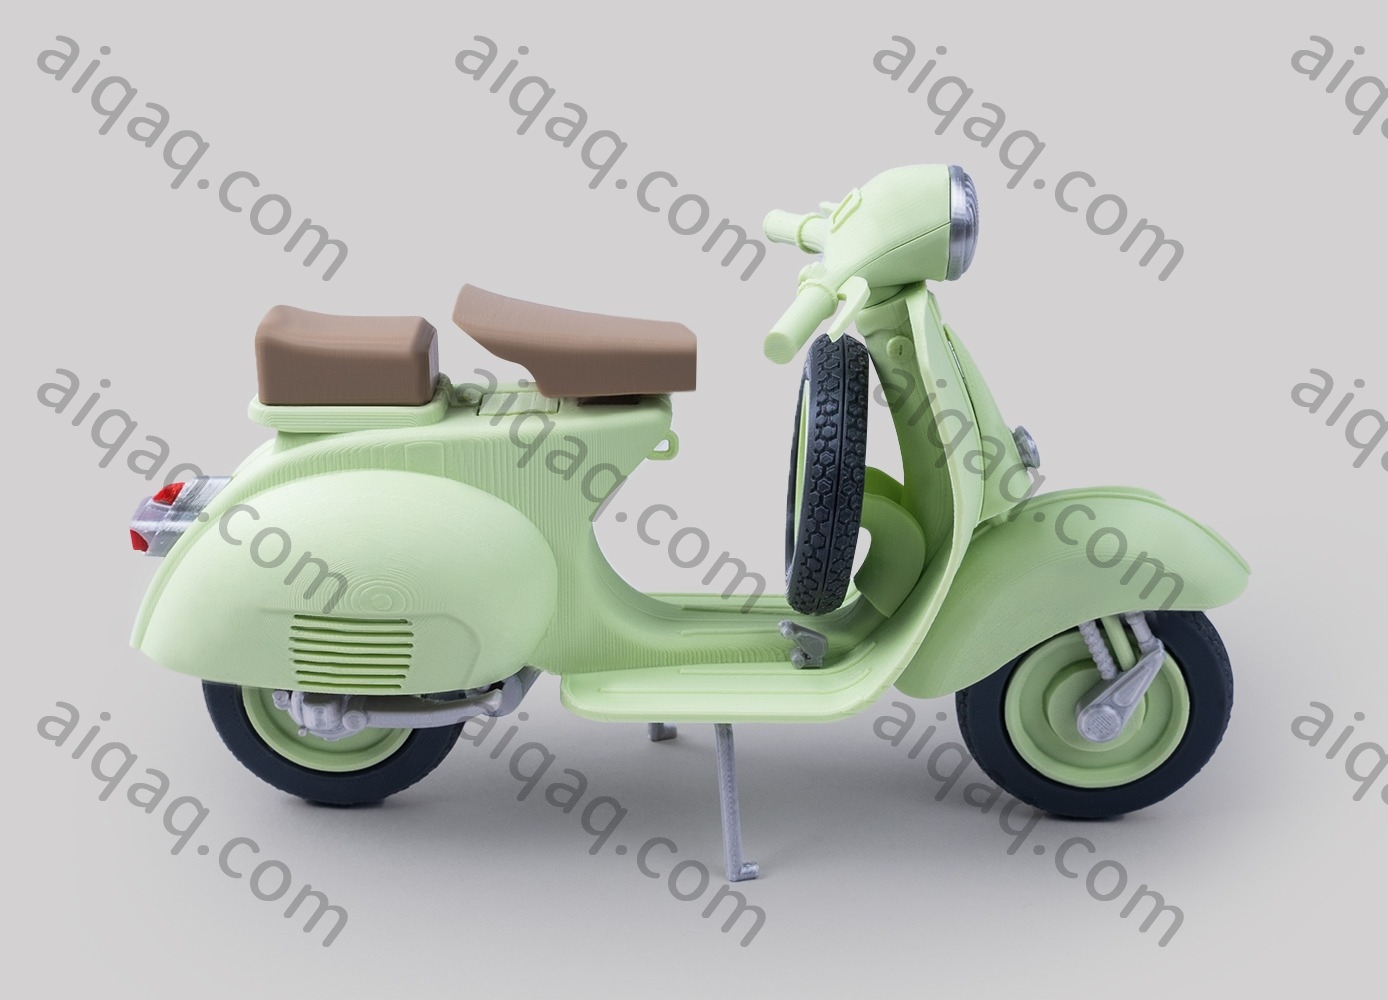 FAB365踏板摩托车团购-3D打印模型众筹3D打印社区-3D打印-STL下载网_3D打印模型网_3D打印机_3D模型库